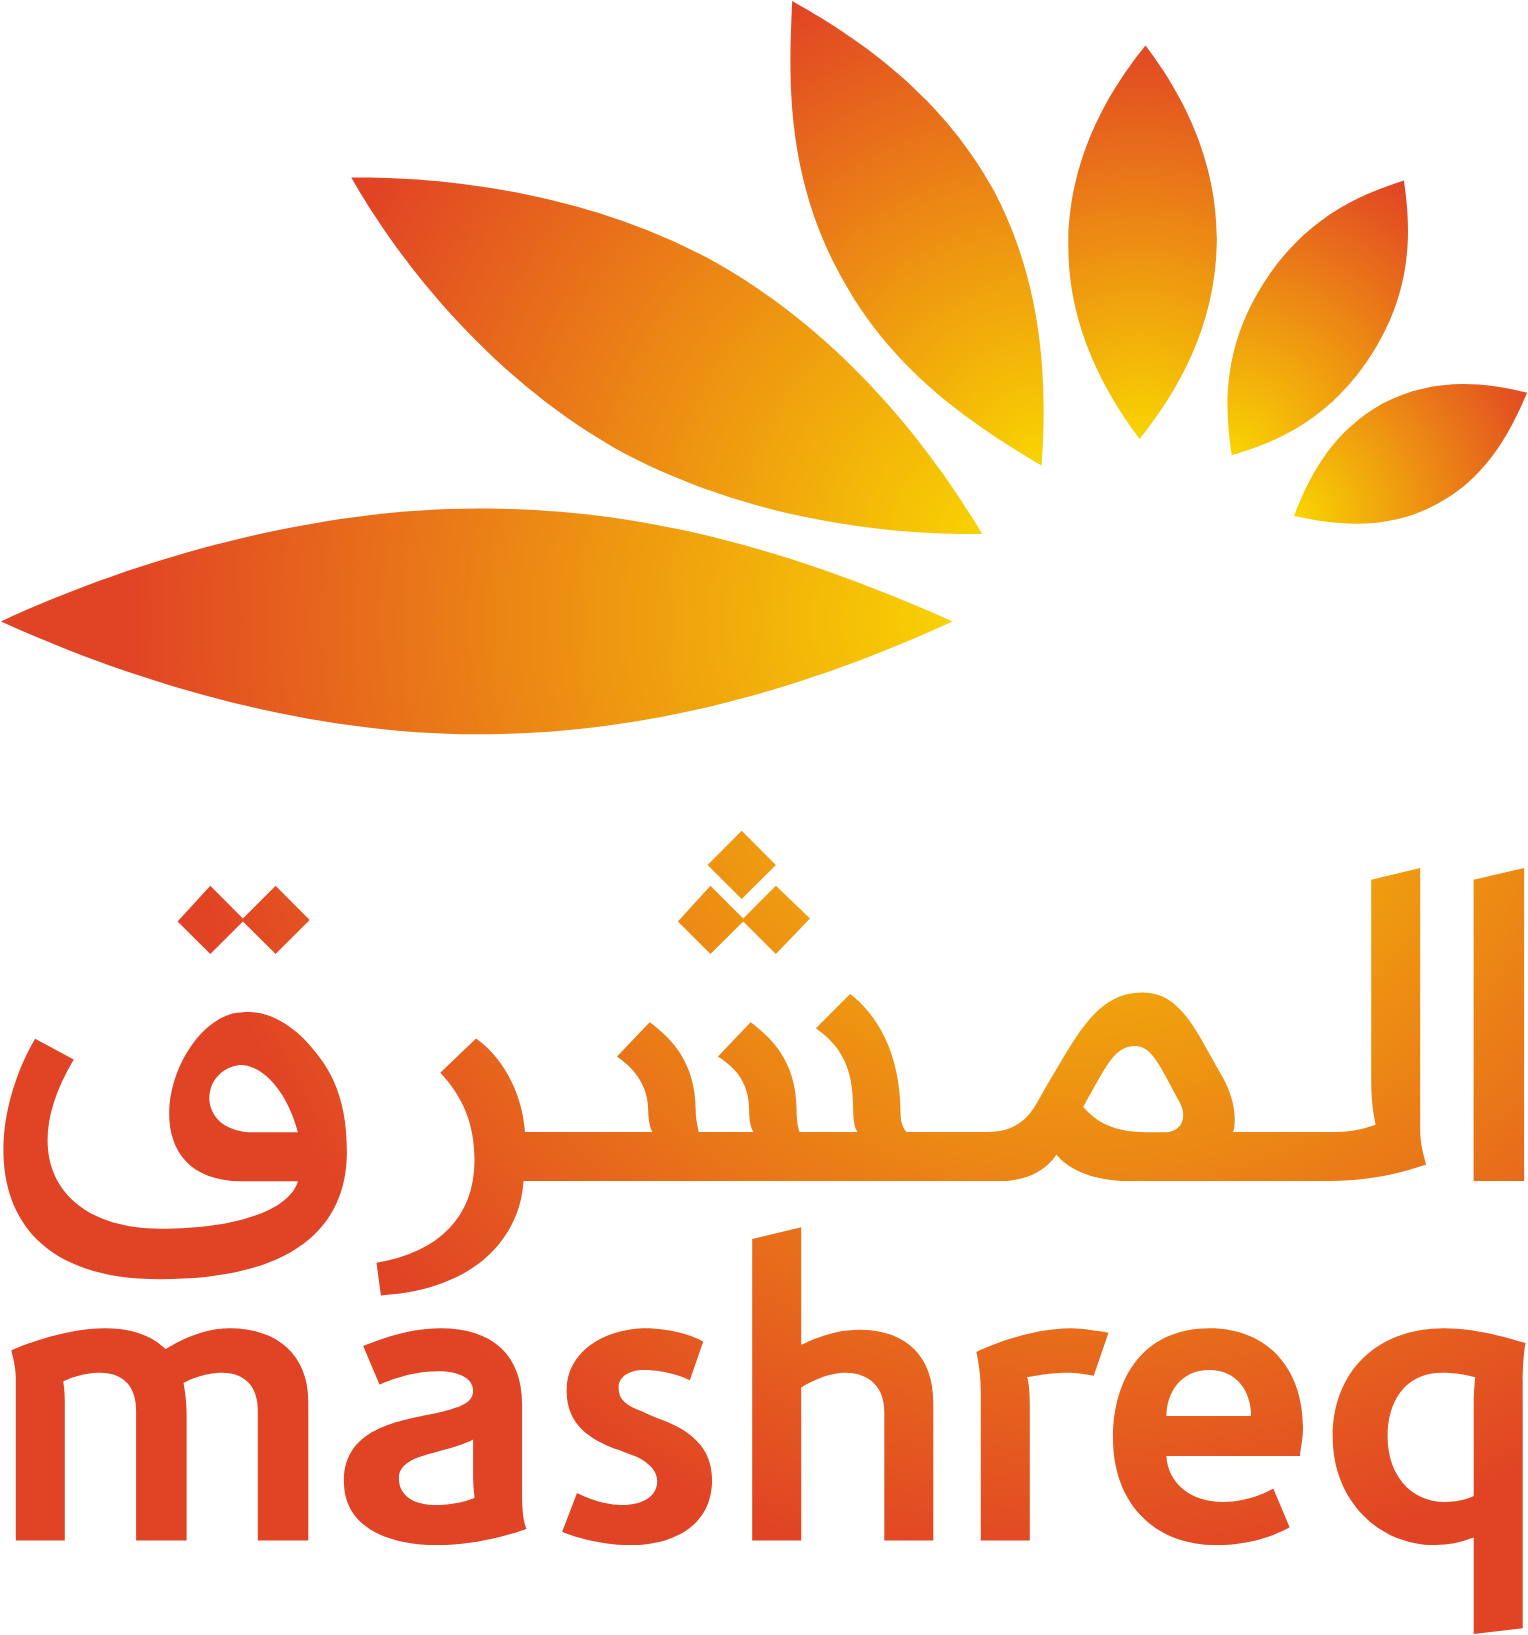 Mashreqbank logo large (transparent PNG)